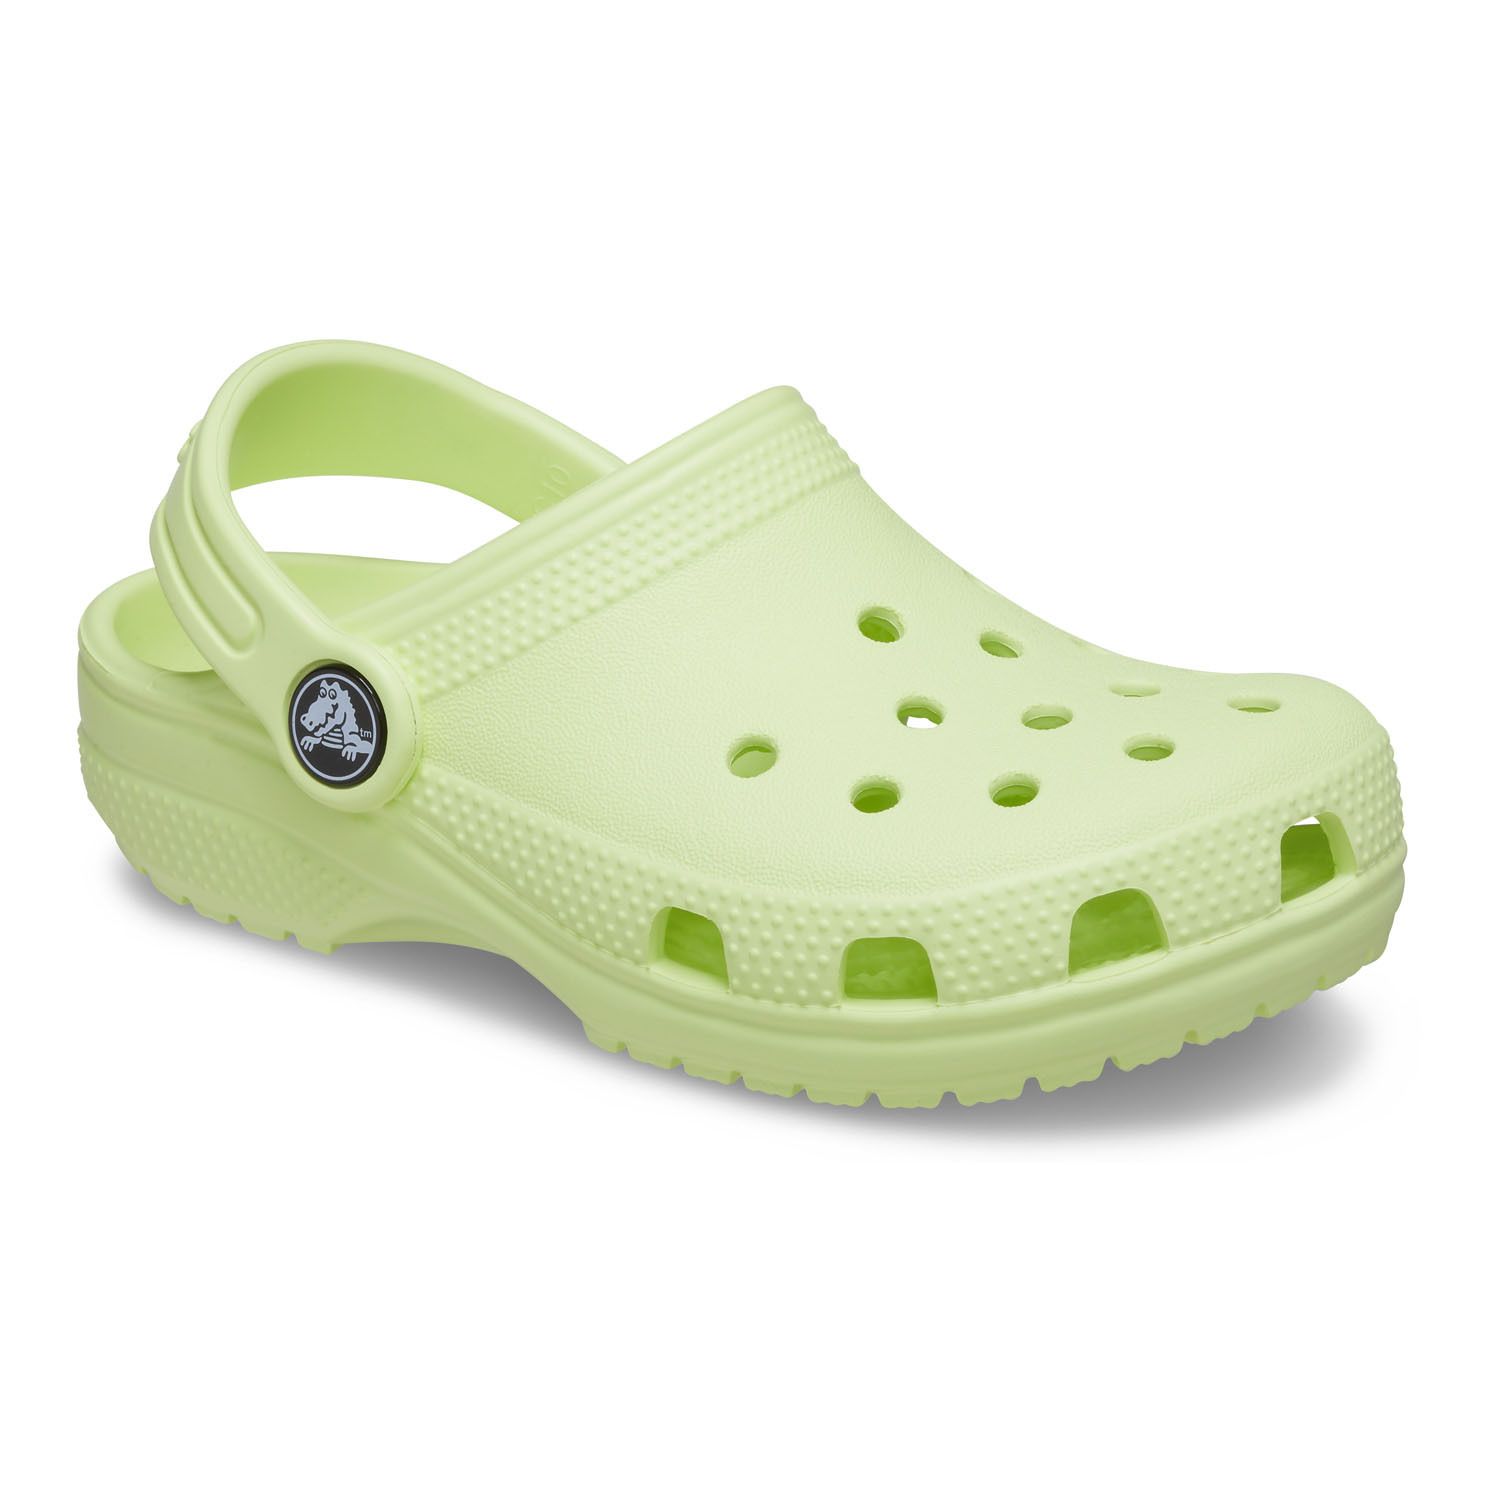 green crocs women's